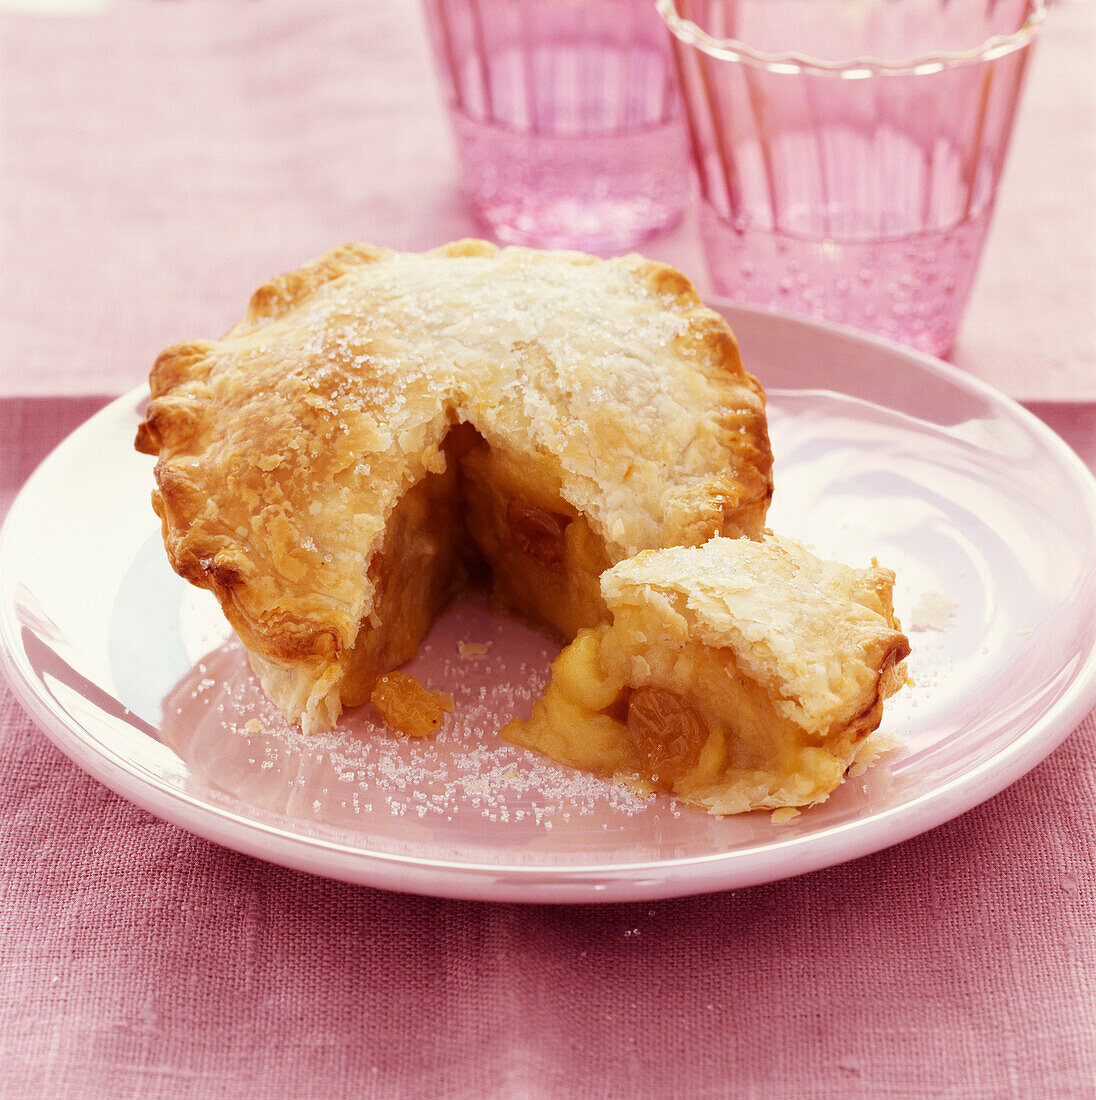 Apple and raisin pie